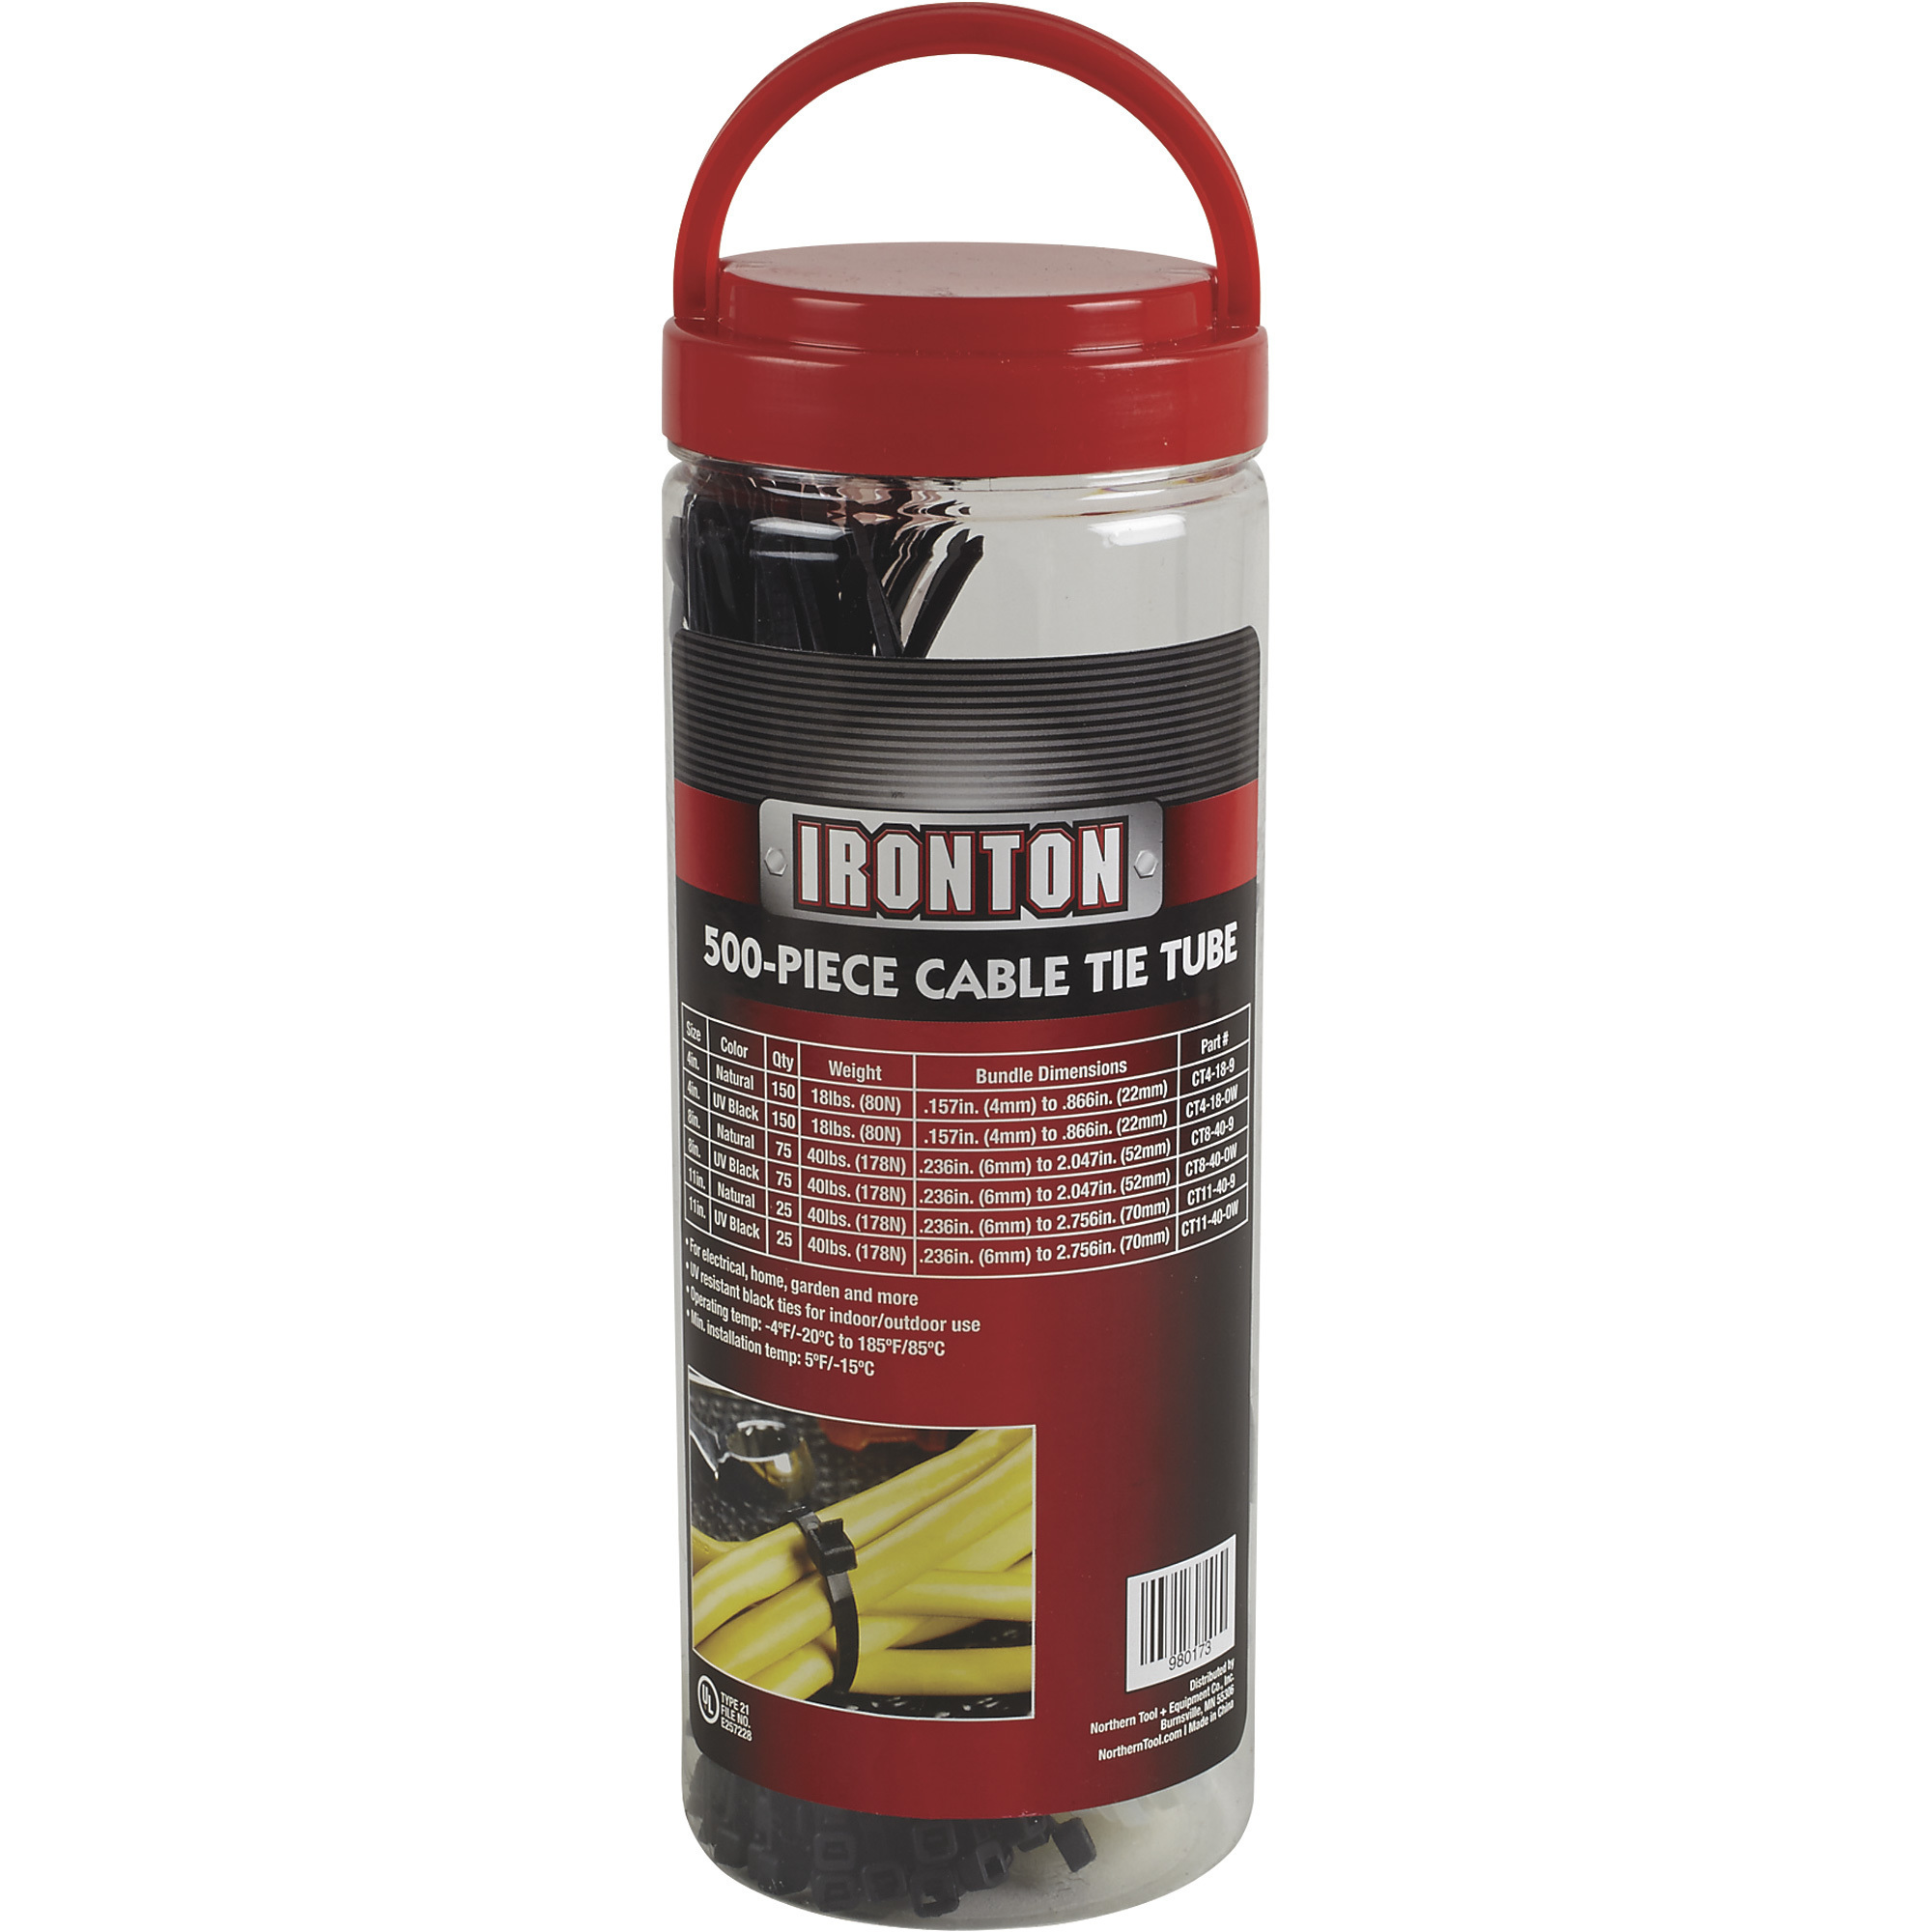 Ironton Multi-Pack Tube of Cable Zip Ties â 500-Pcs., Assorted Sizes/Colors